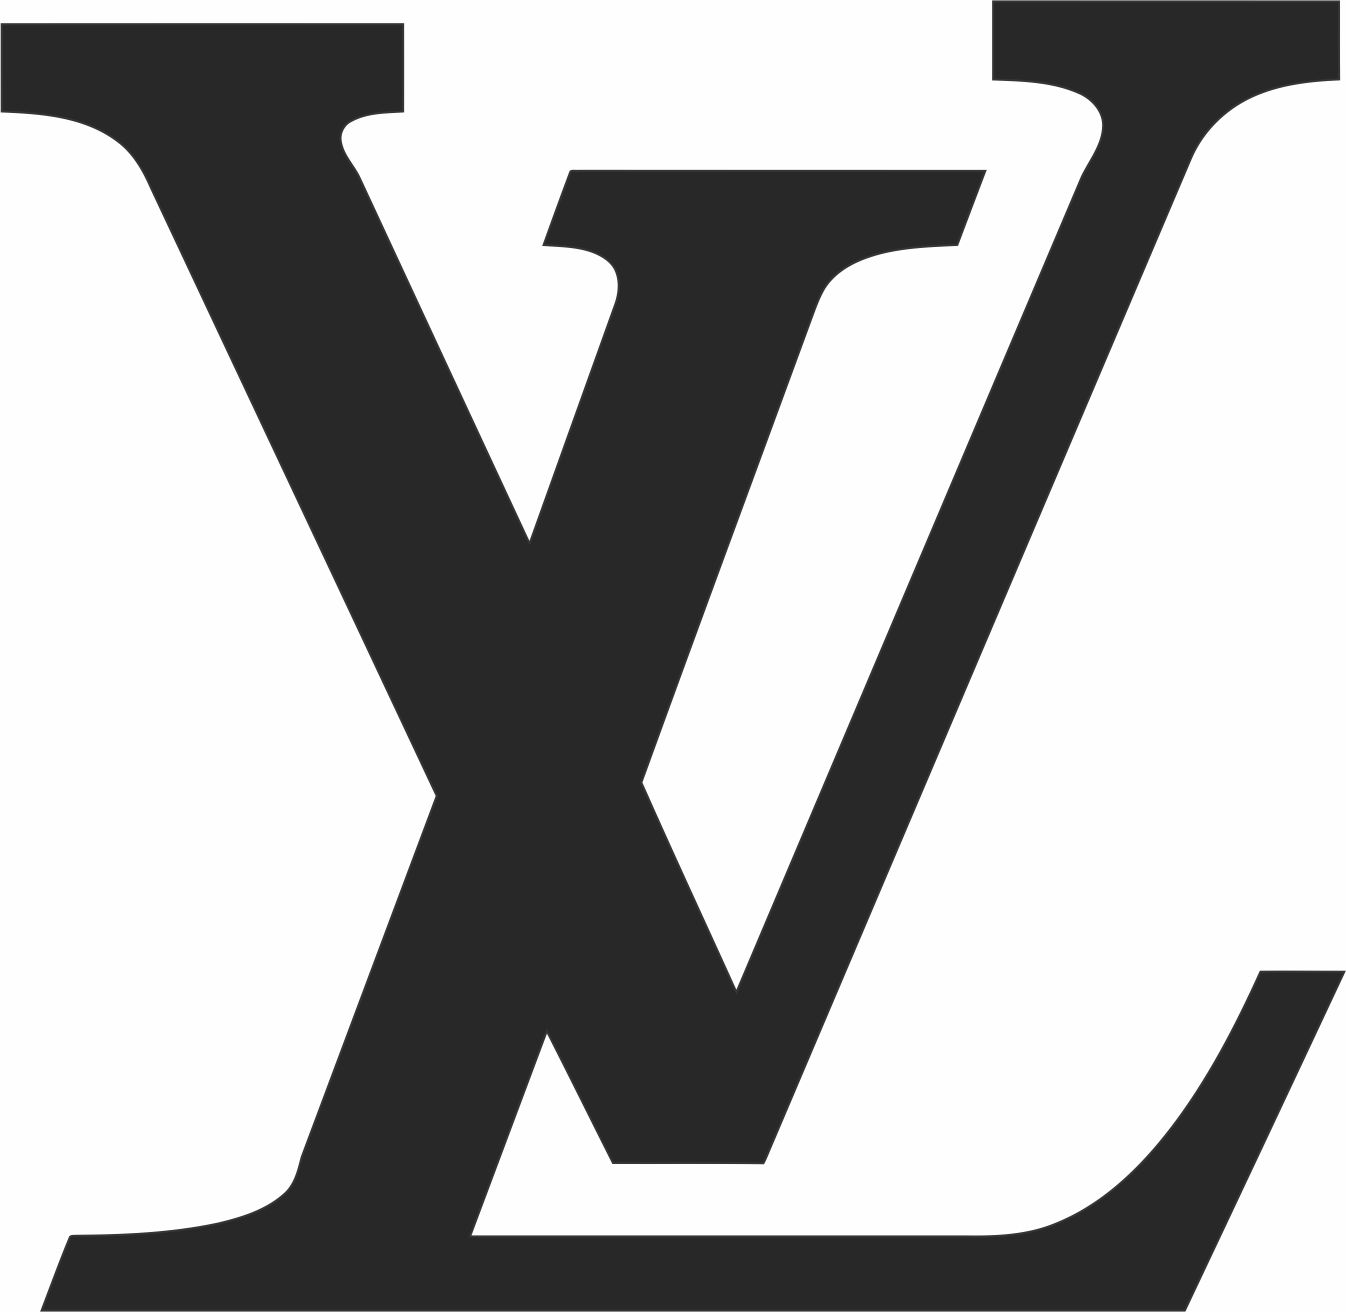 Louis Vuitton Pattern SVG - Free SVG Files